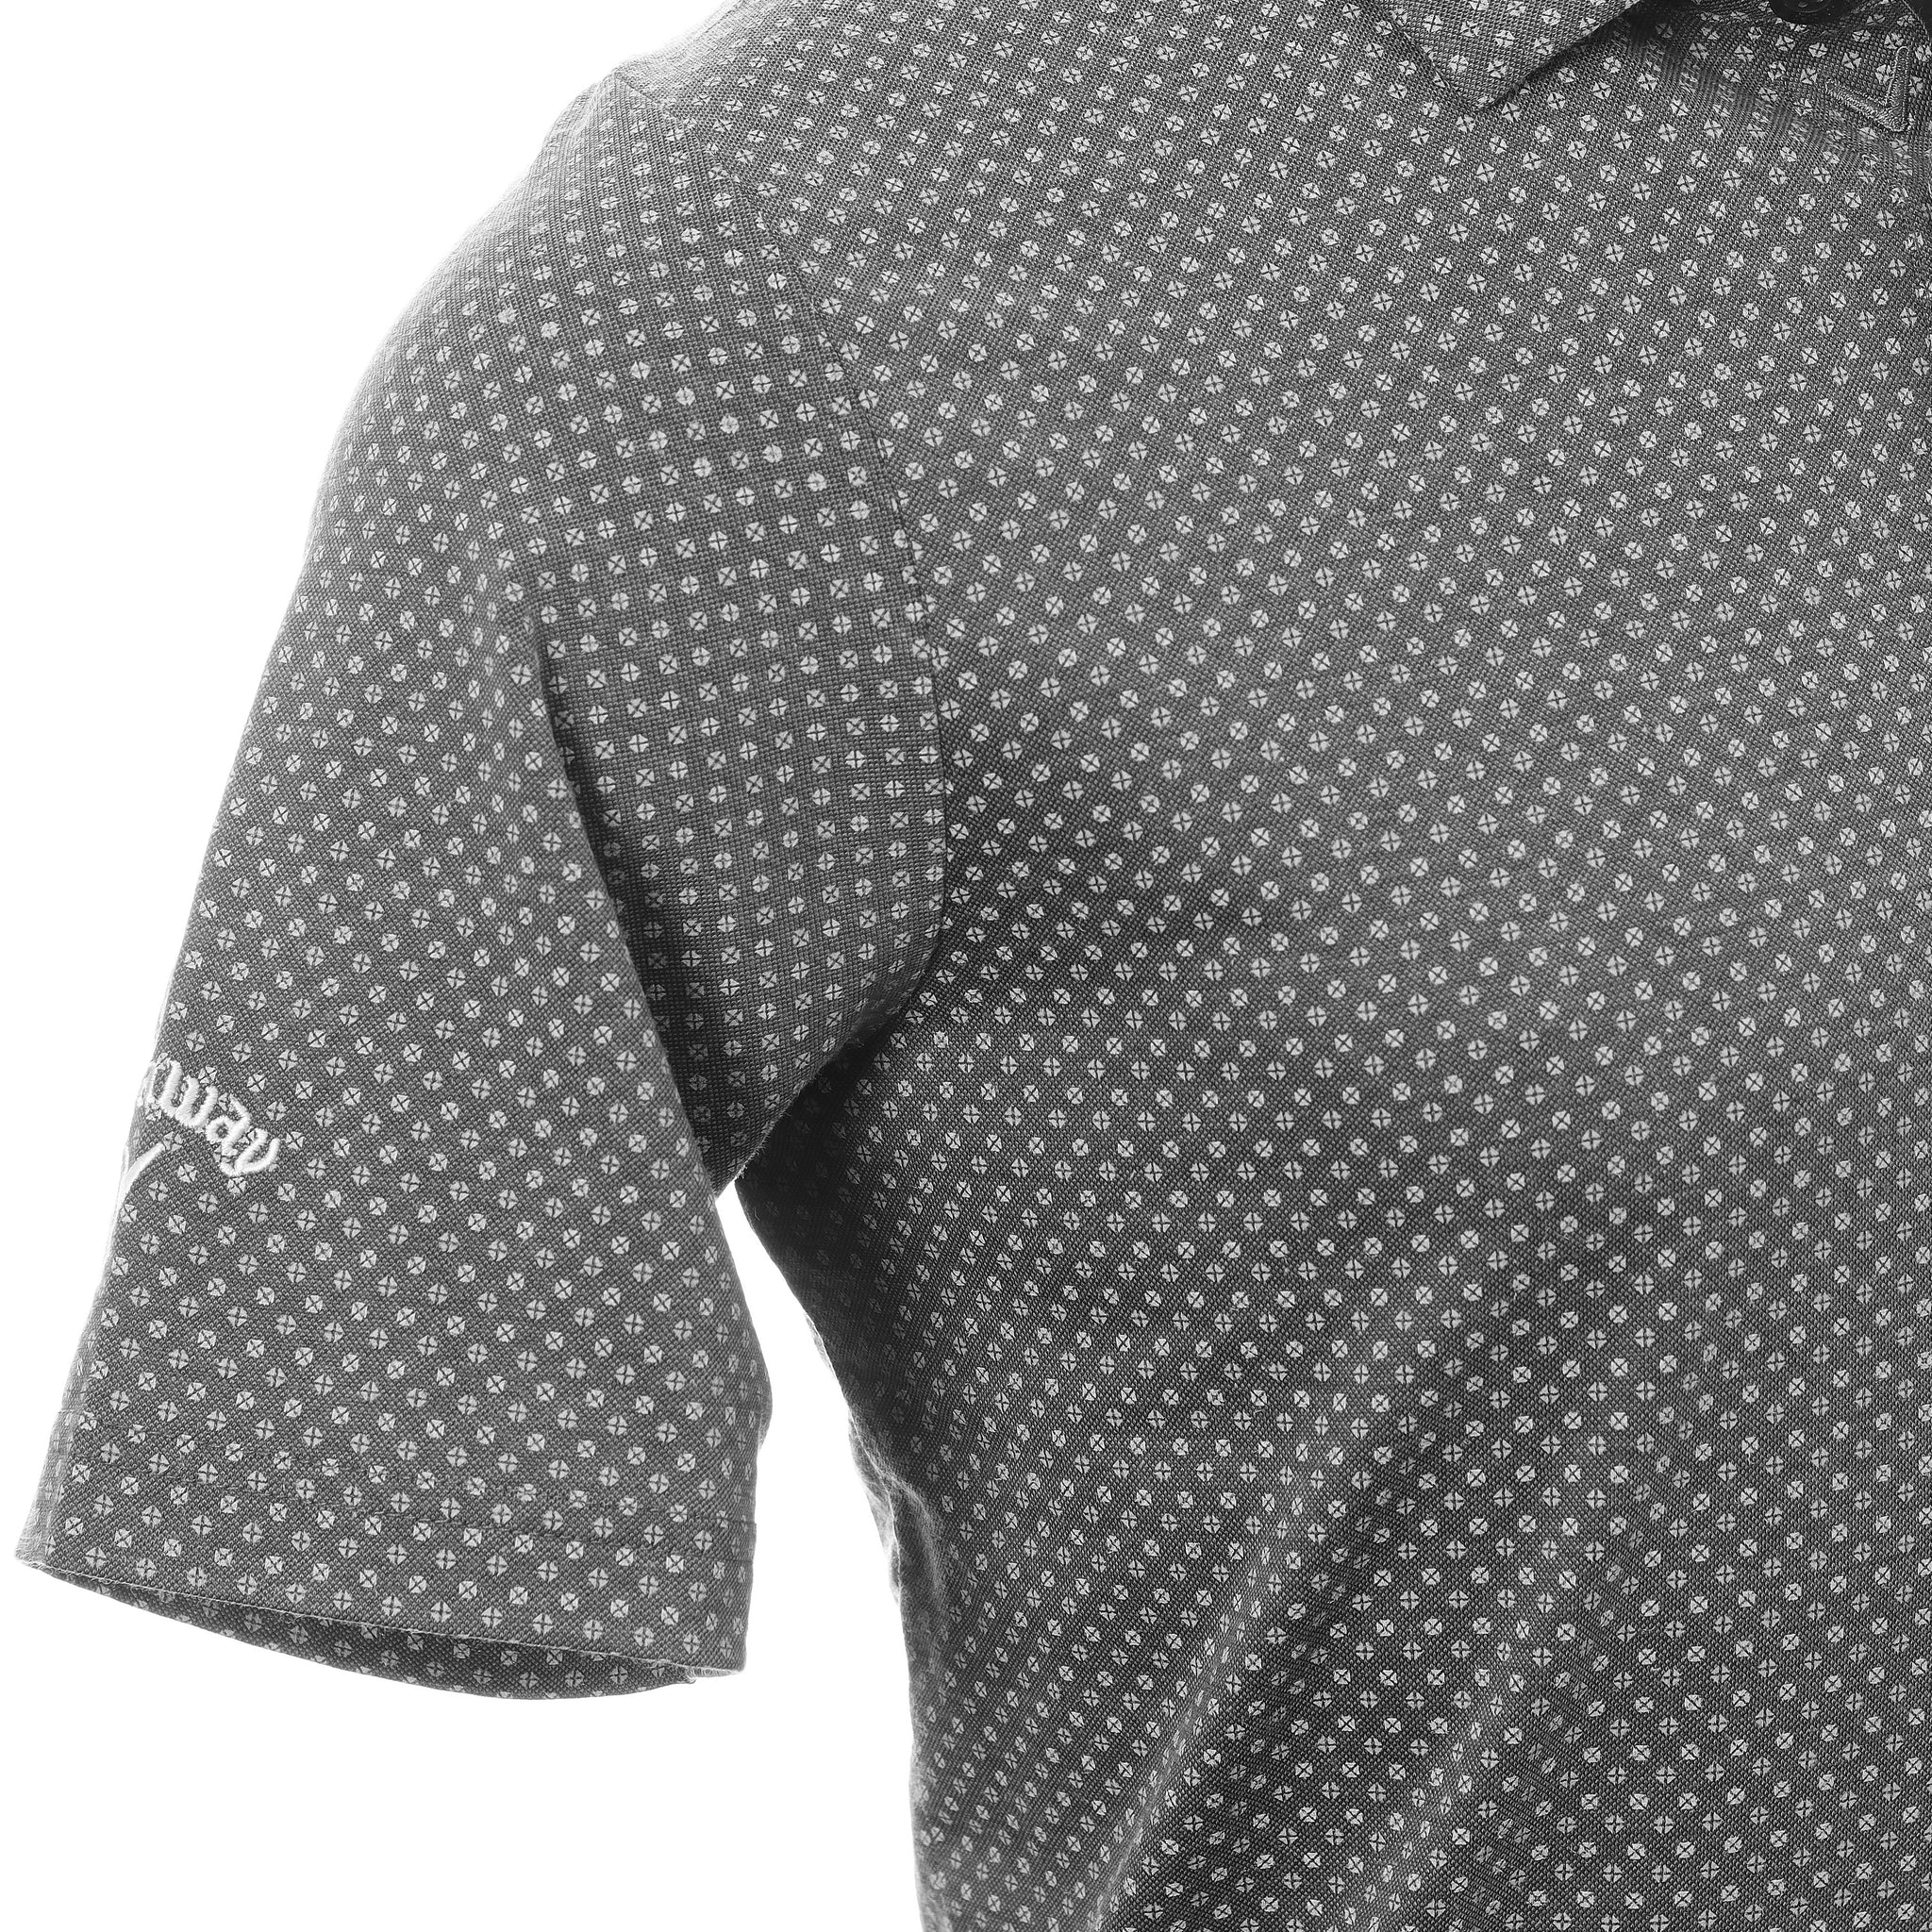 Callaway Golf Soft Touch Micro Print Shirt